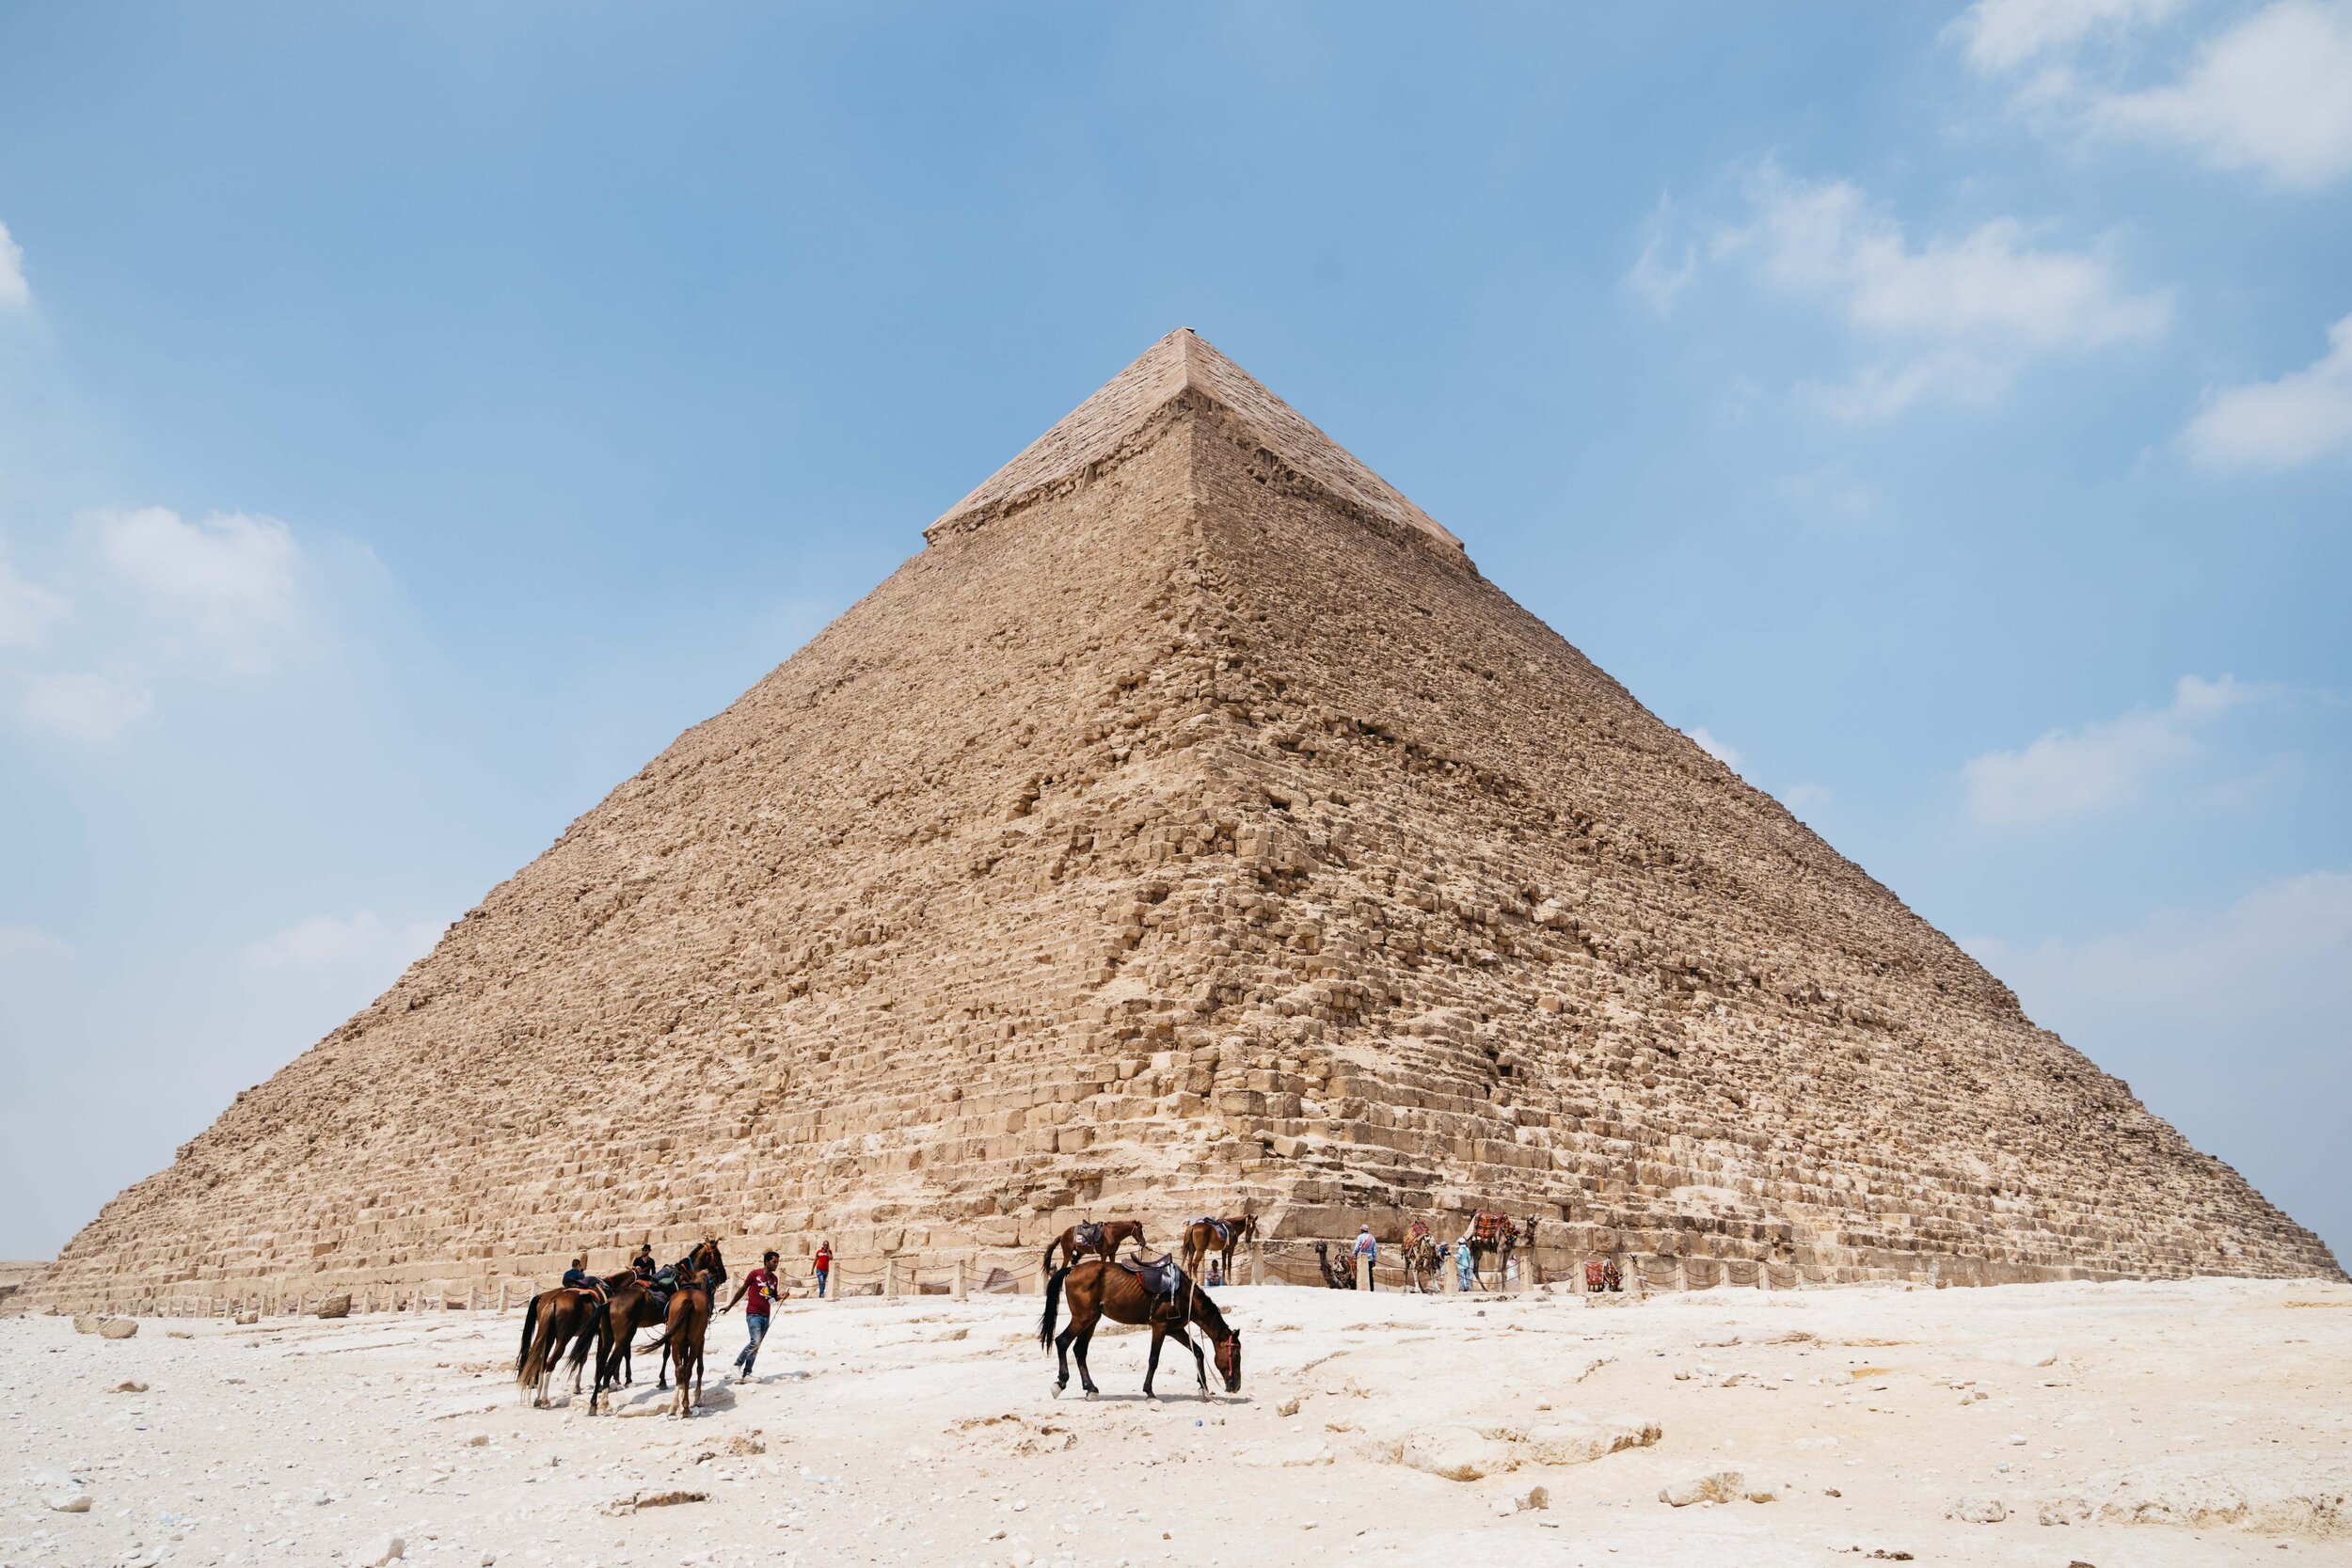 Pyramids, Cairo